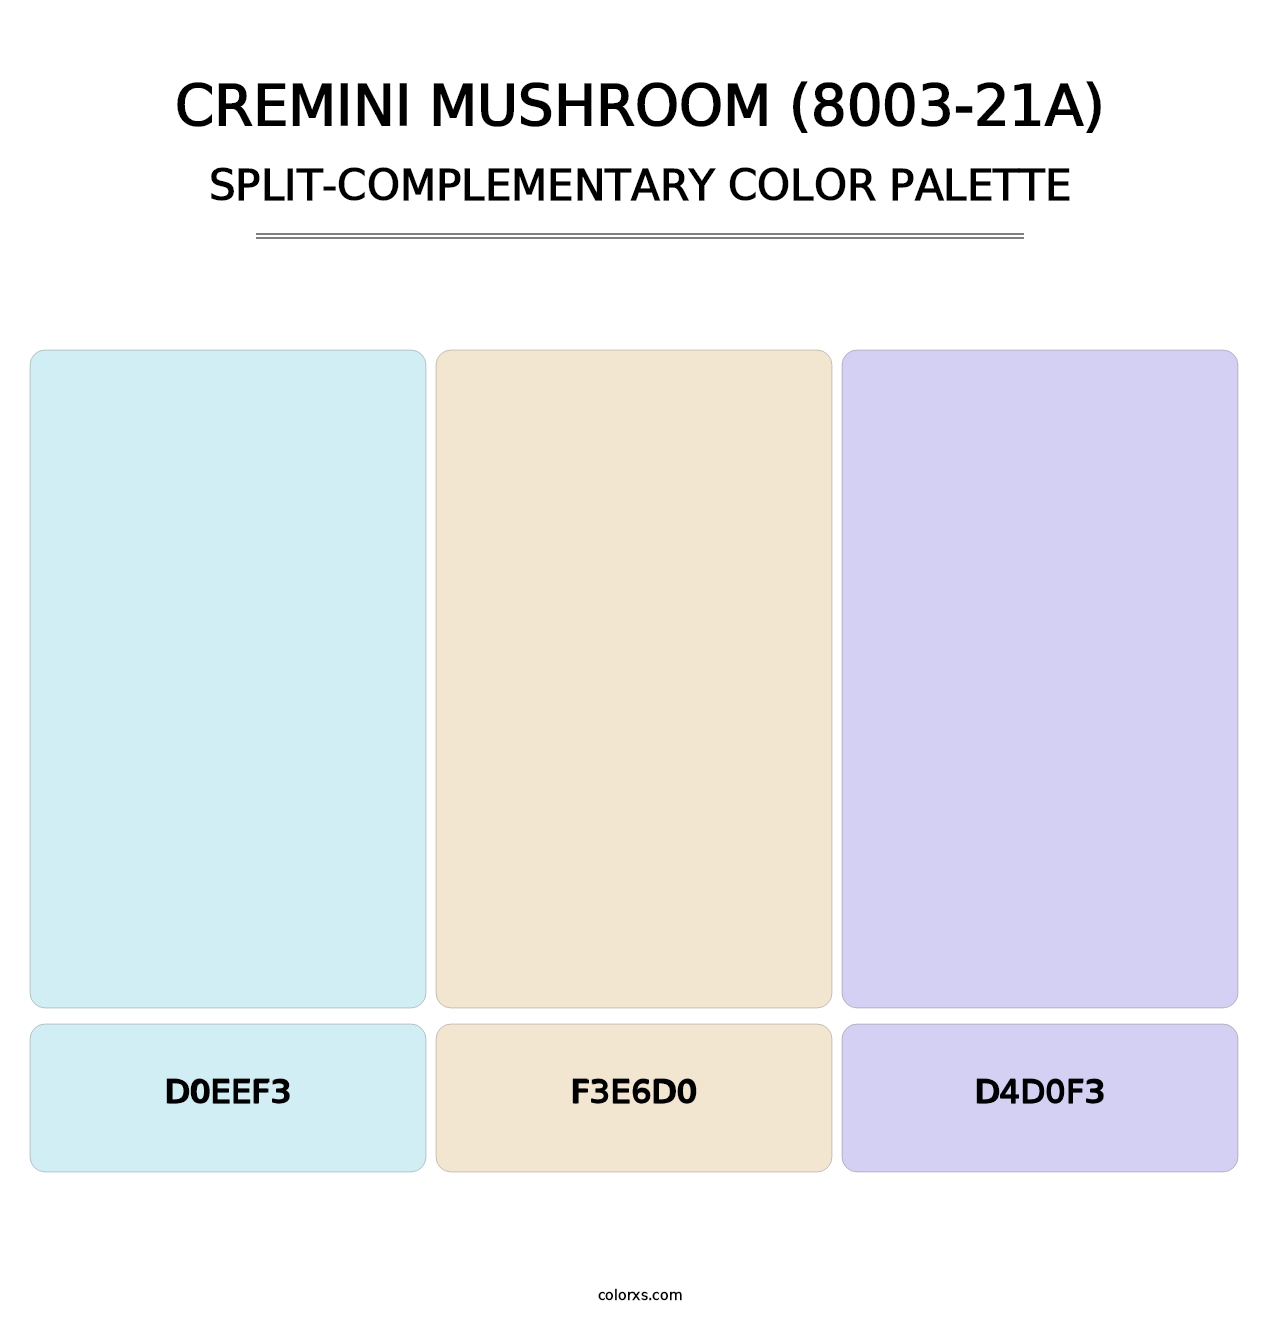 Cremini Mushroom (8003-21A) - Split-Complementary Color Palette